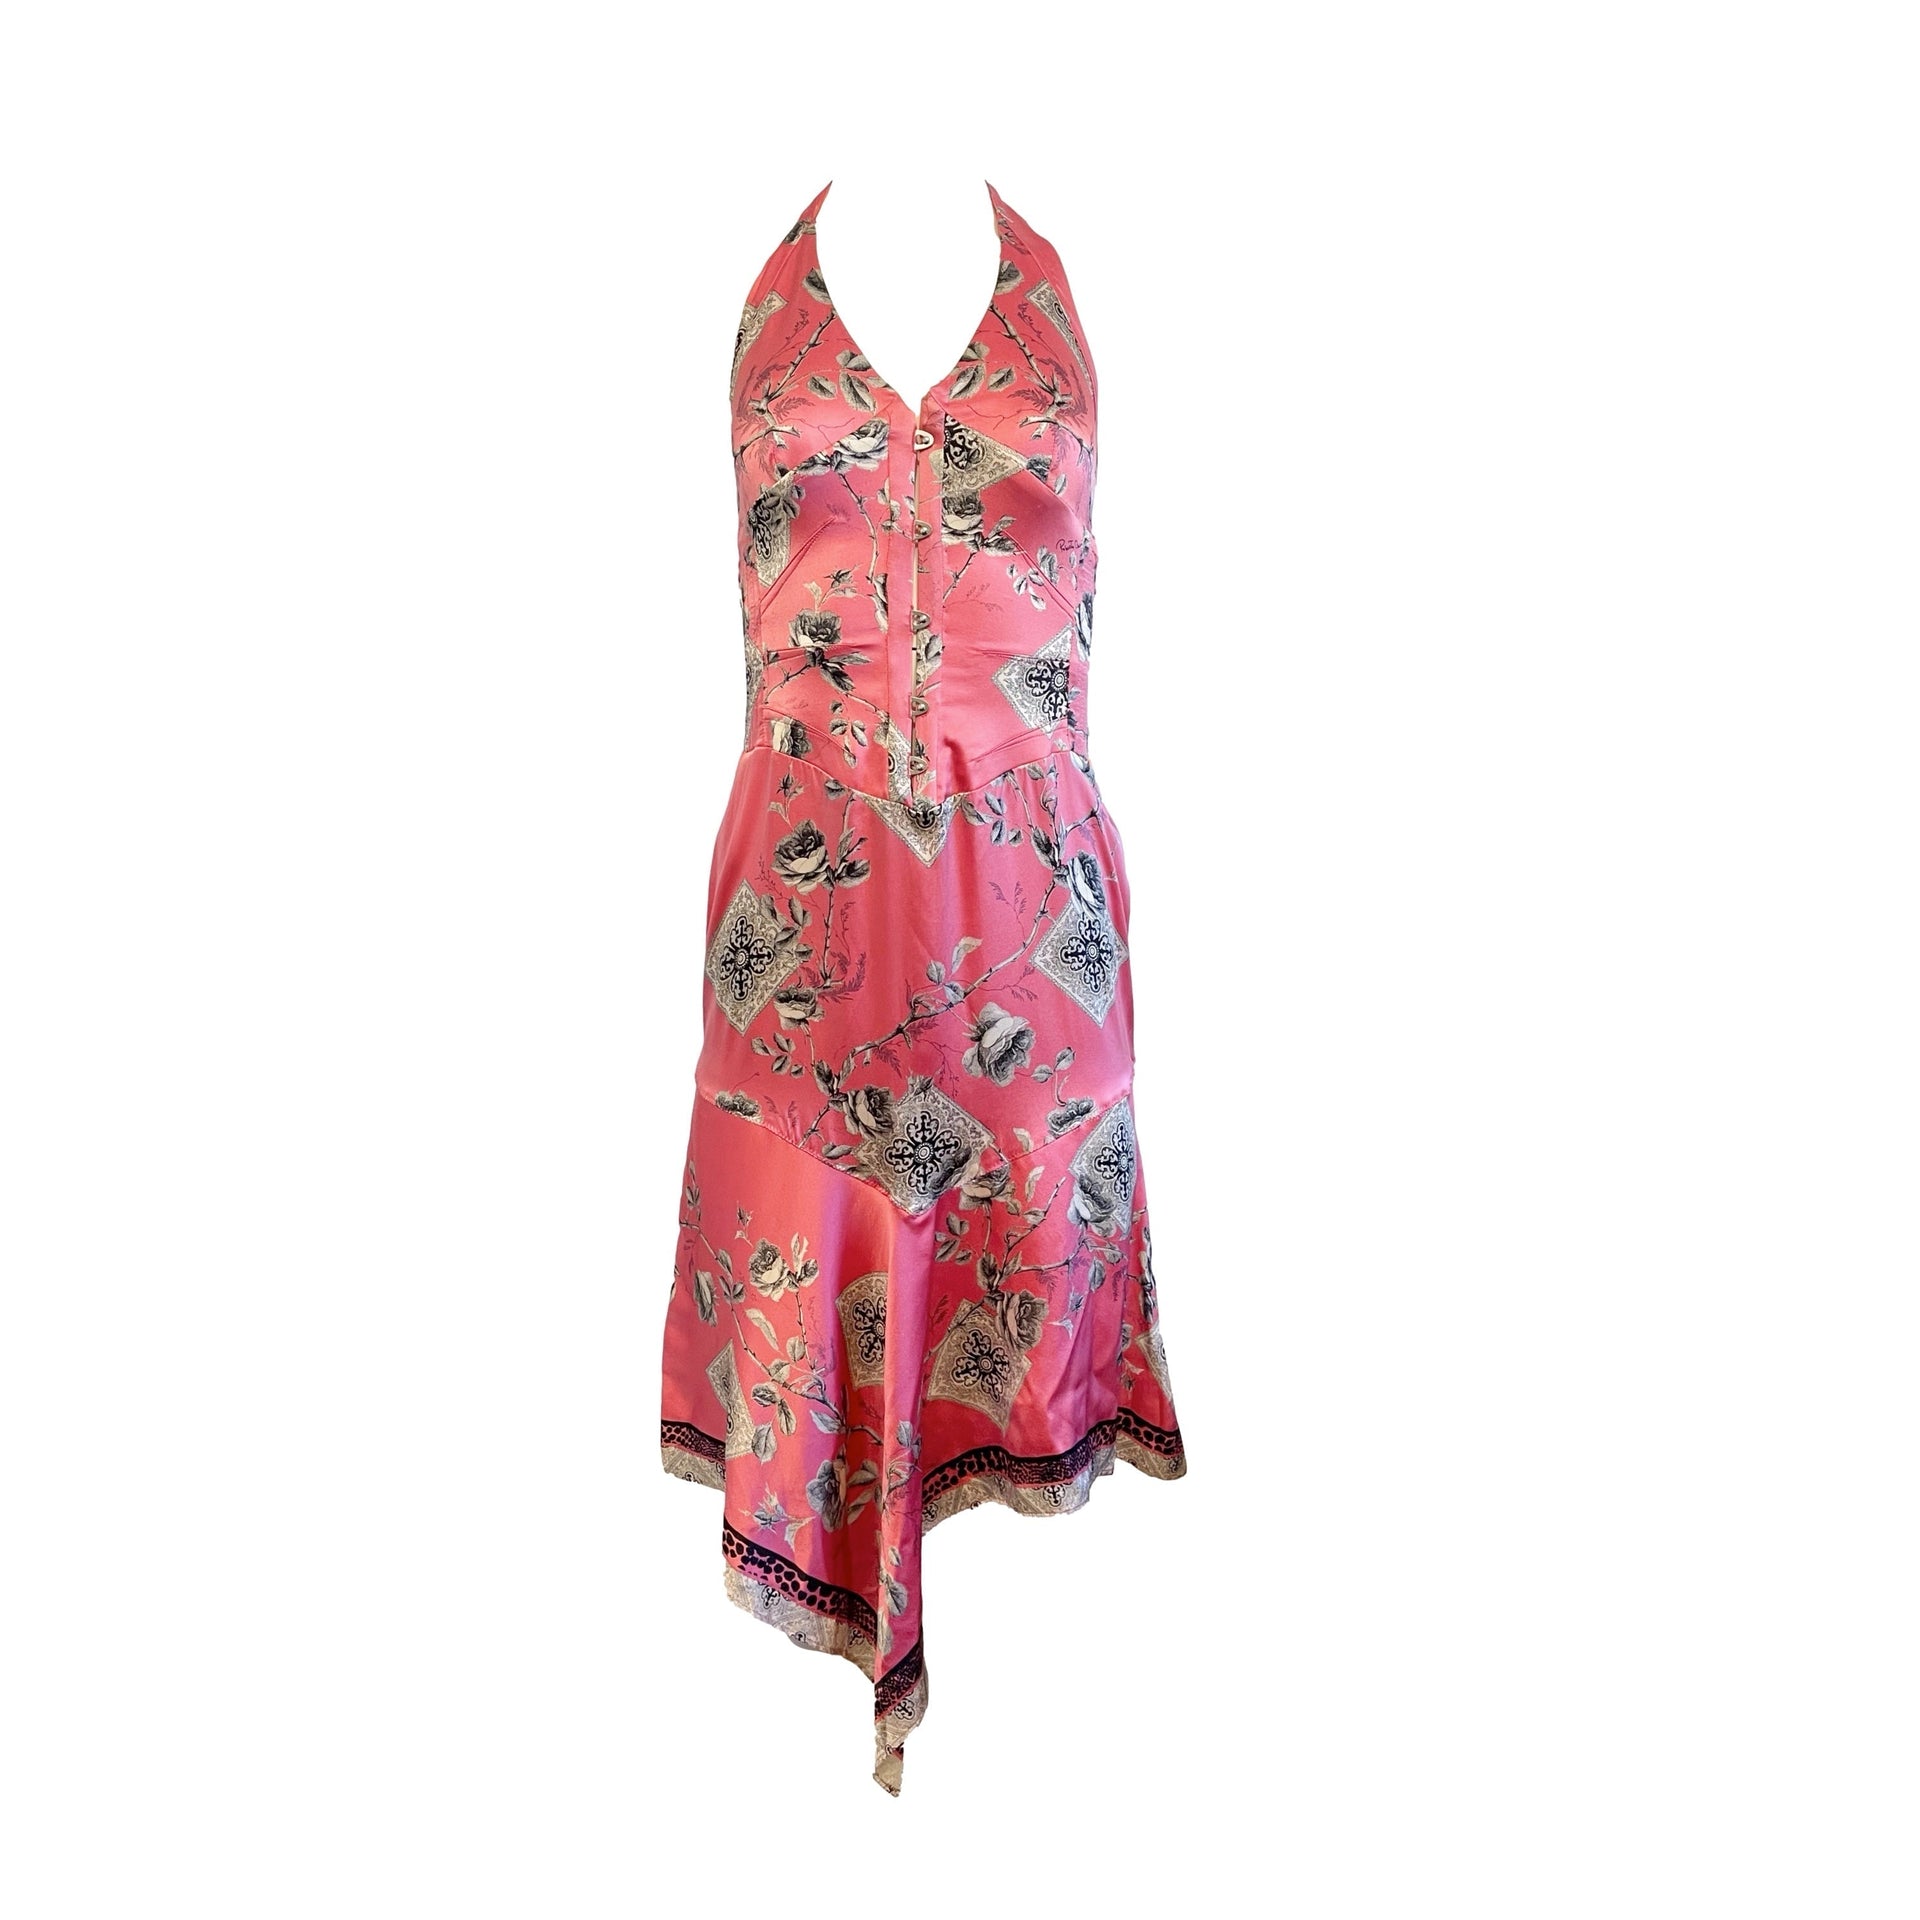 Treasures of NYC - Roberto Cavalli Pink Floral Corset Dress